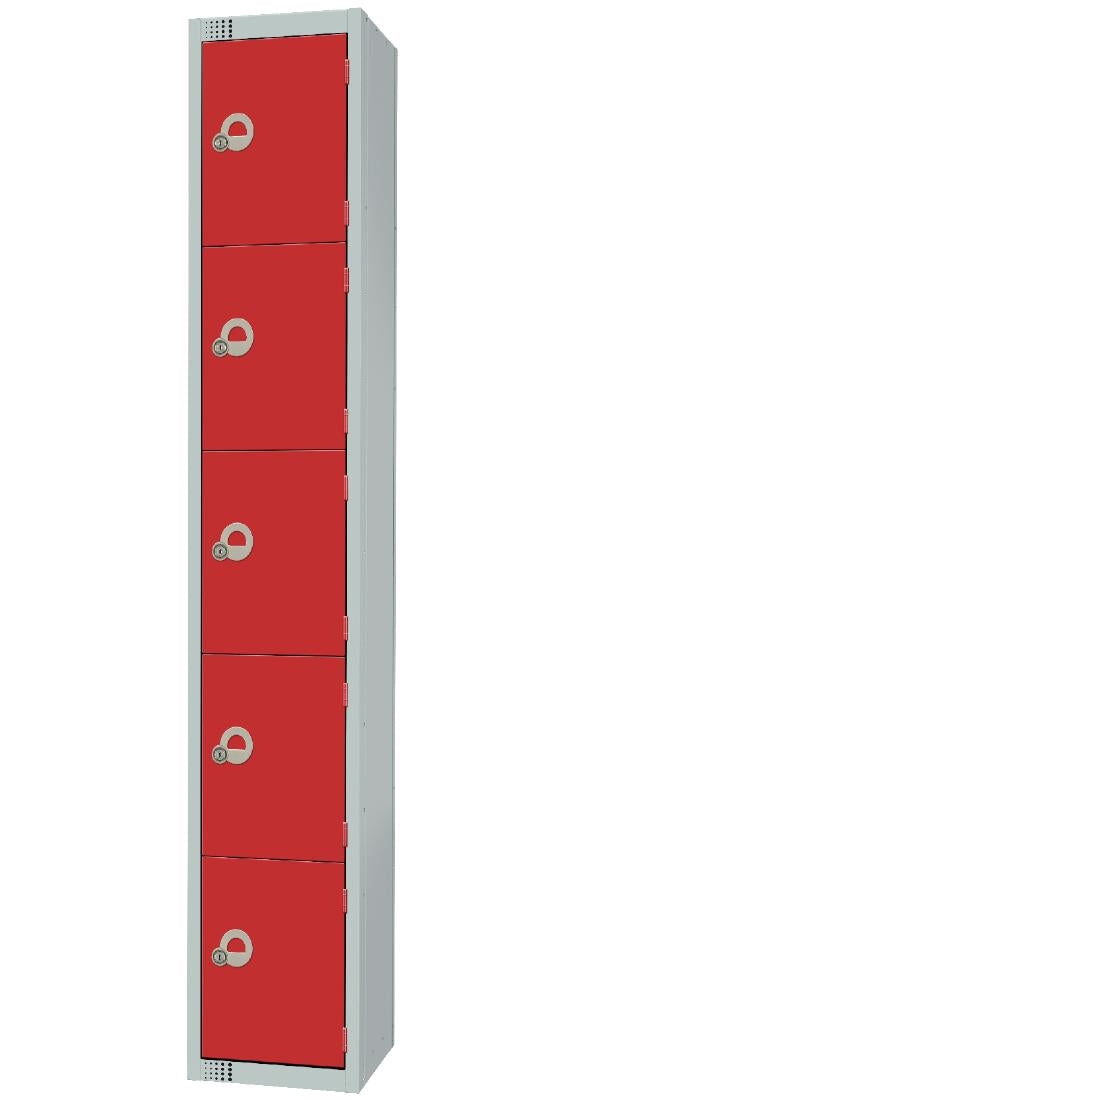 CG618-CLS Elite Five Door Manual Combination Locker Locker Red with Sloping Top JD Catering Equipment Solutions Ltd